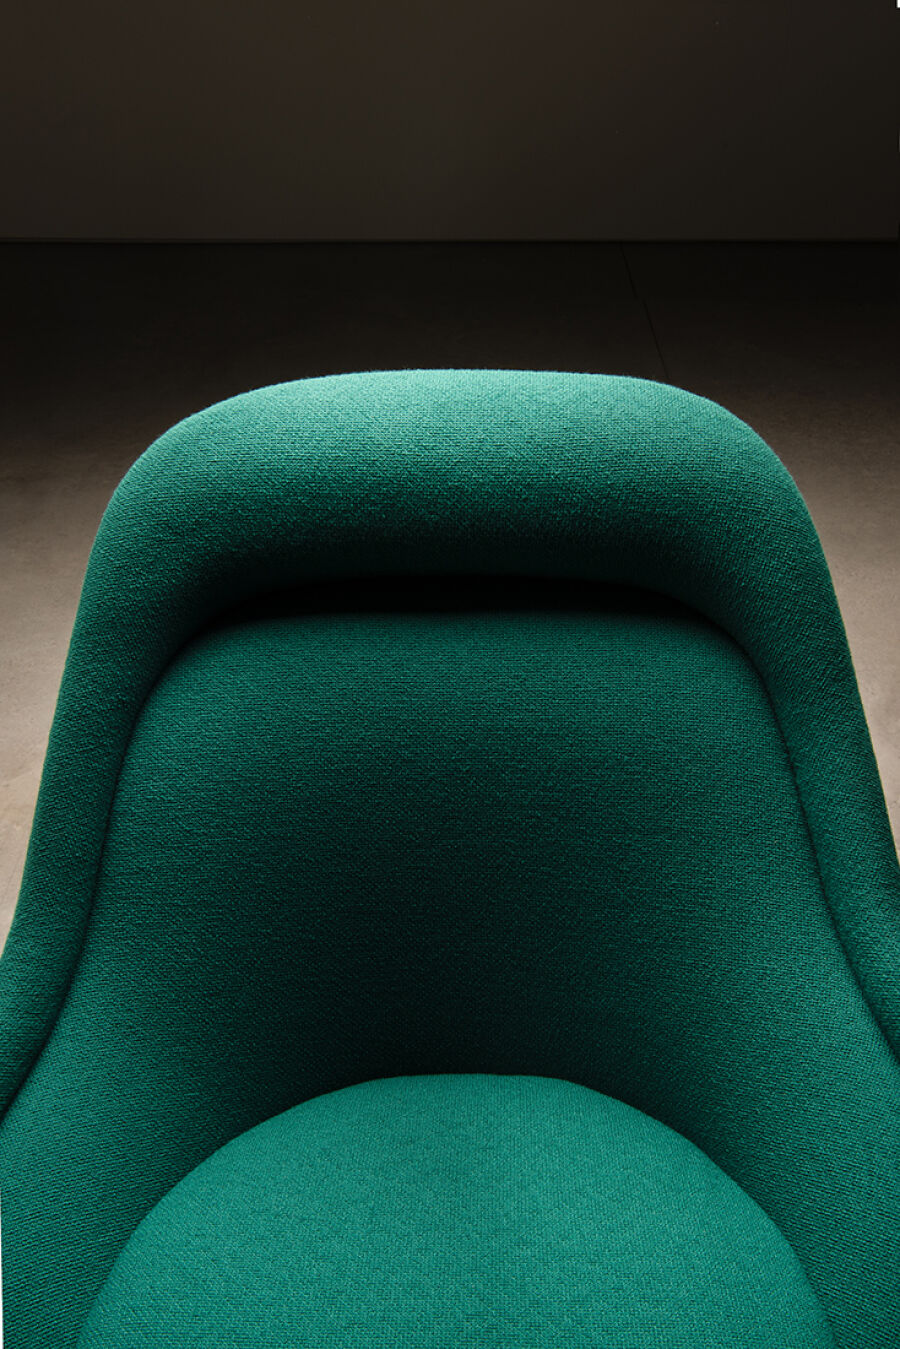 green-chair4